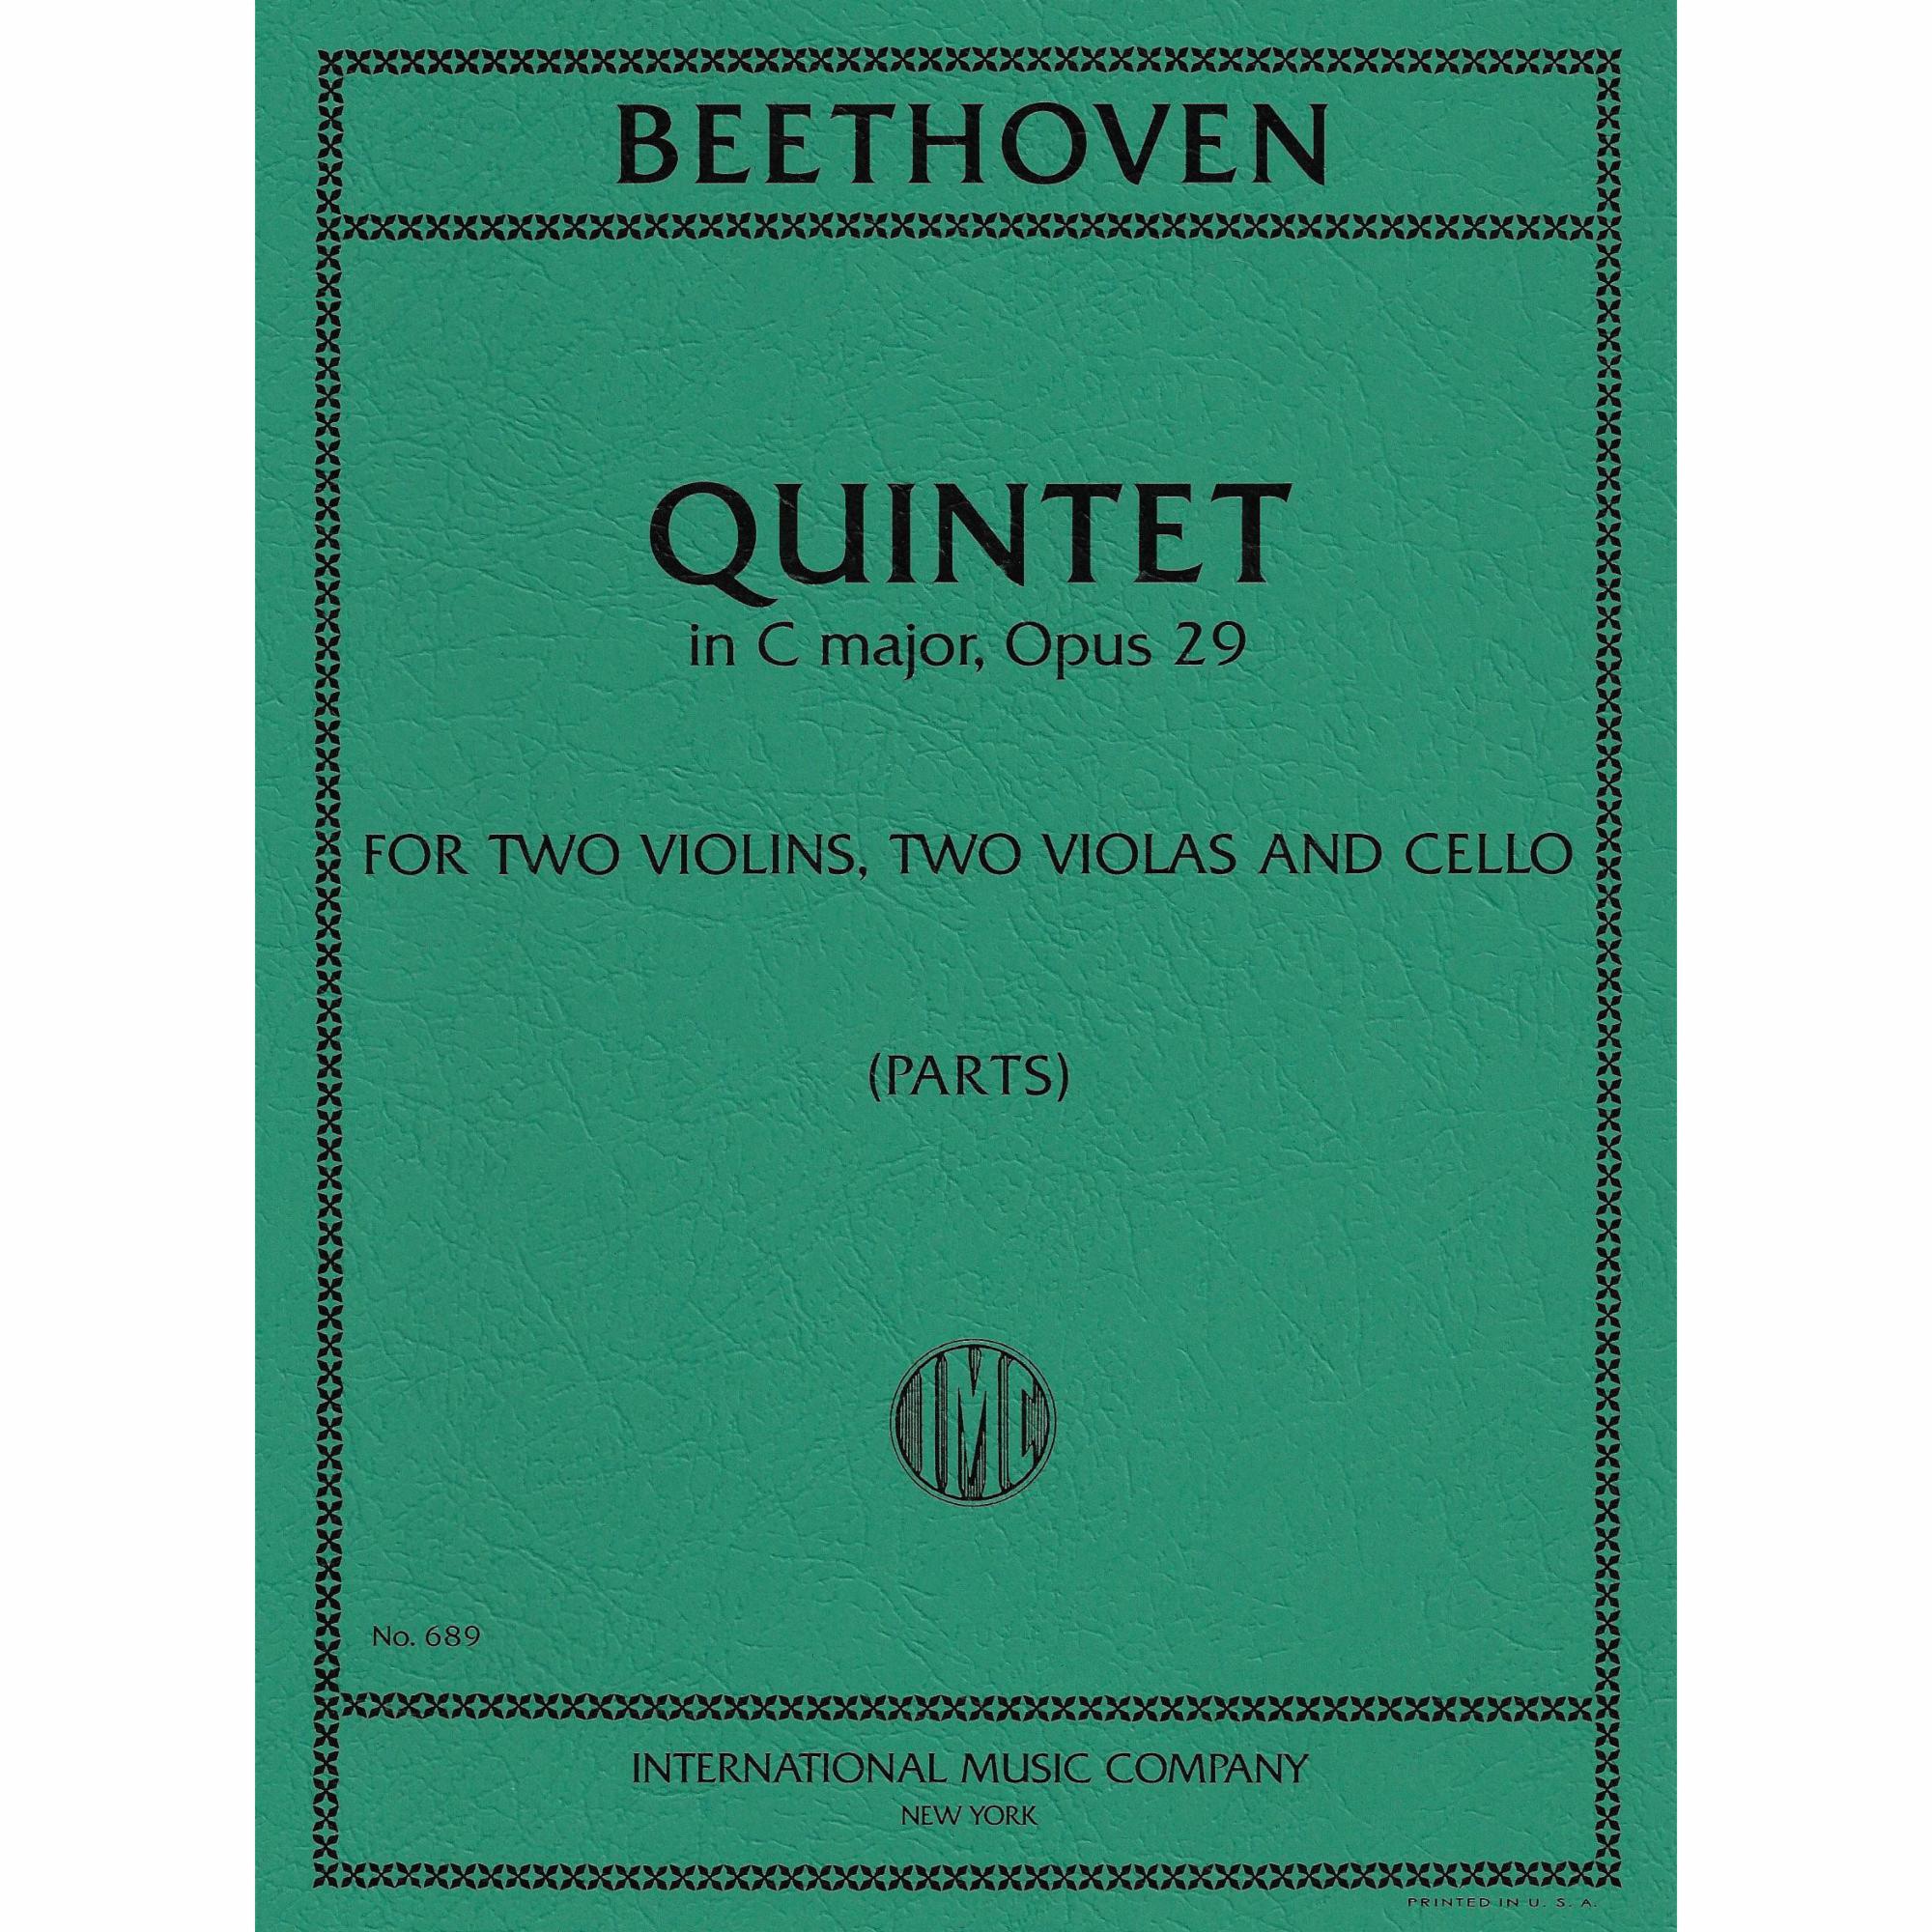 Beethoven -- String Quintet in C Major, Op. 29